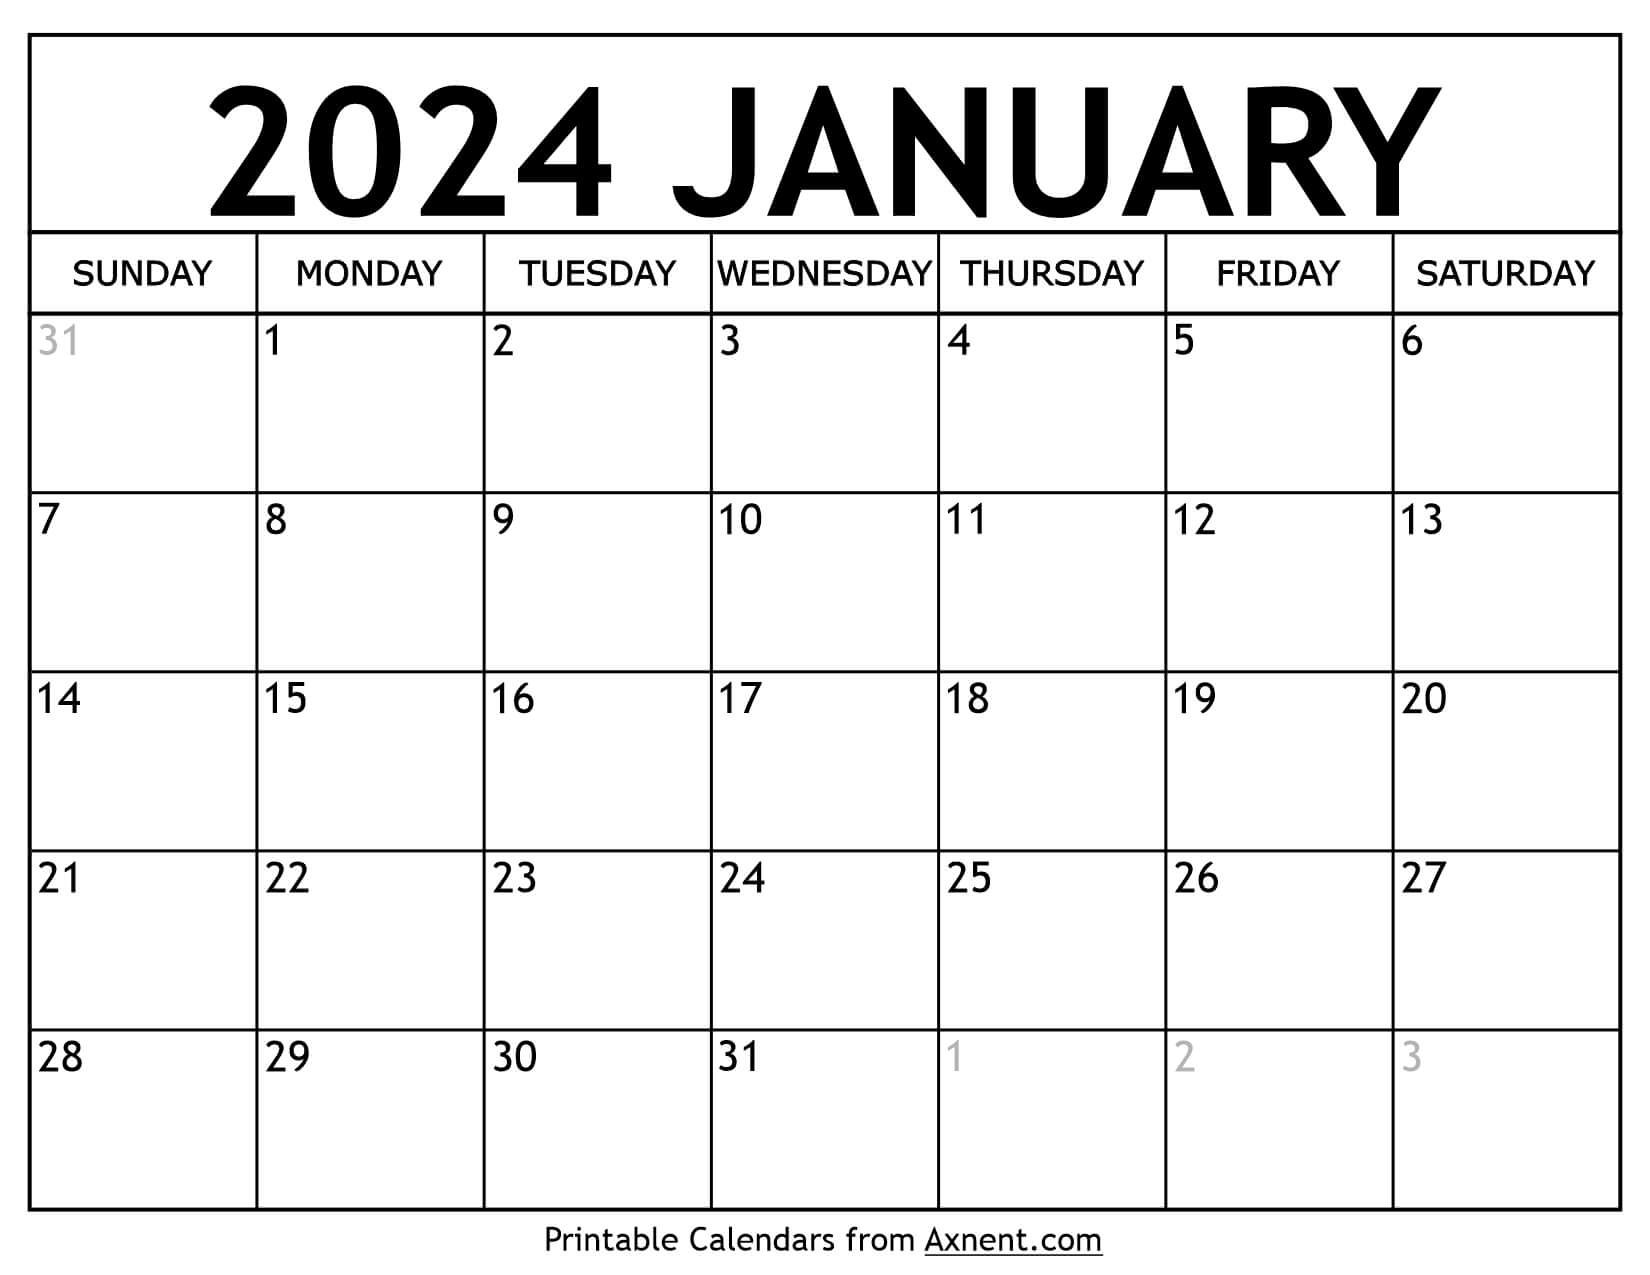 Printable January 2024 Calendar Template - Print Now for 2024 January Calendar Free Printable